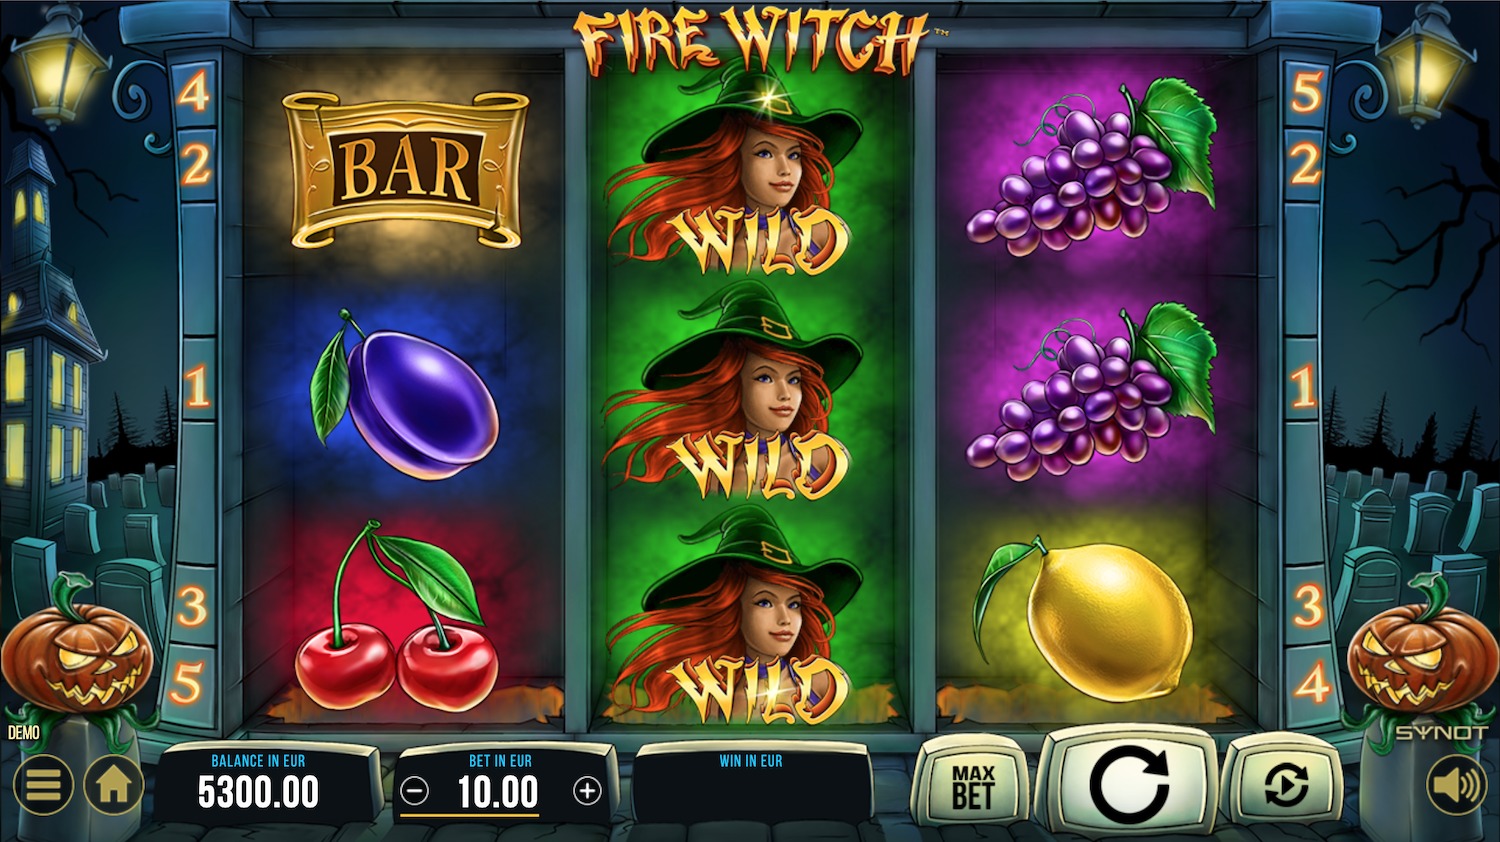 Slot online Fire Witch oleh SYNOT Games - pratinjau gulungan